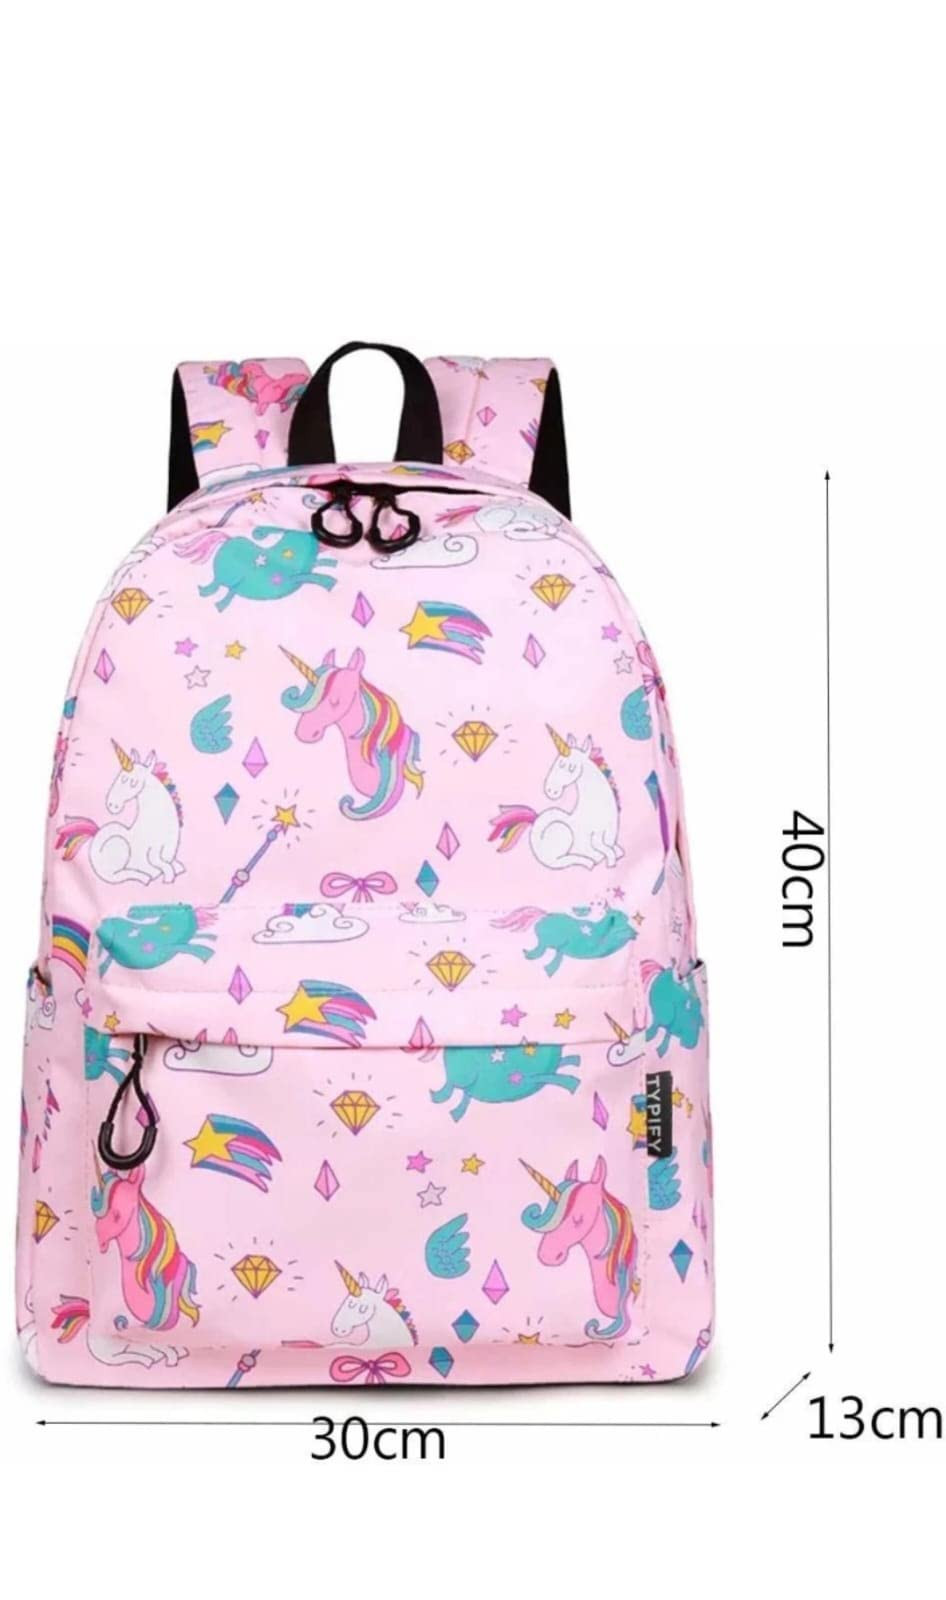 Buy TYPIFY Women Fashion Casual Bag Nylon Shoulder Bag Oxford Clip Handbag  Nylon Zipper (Pink) at Amazon.in